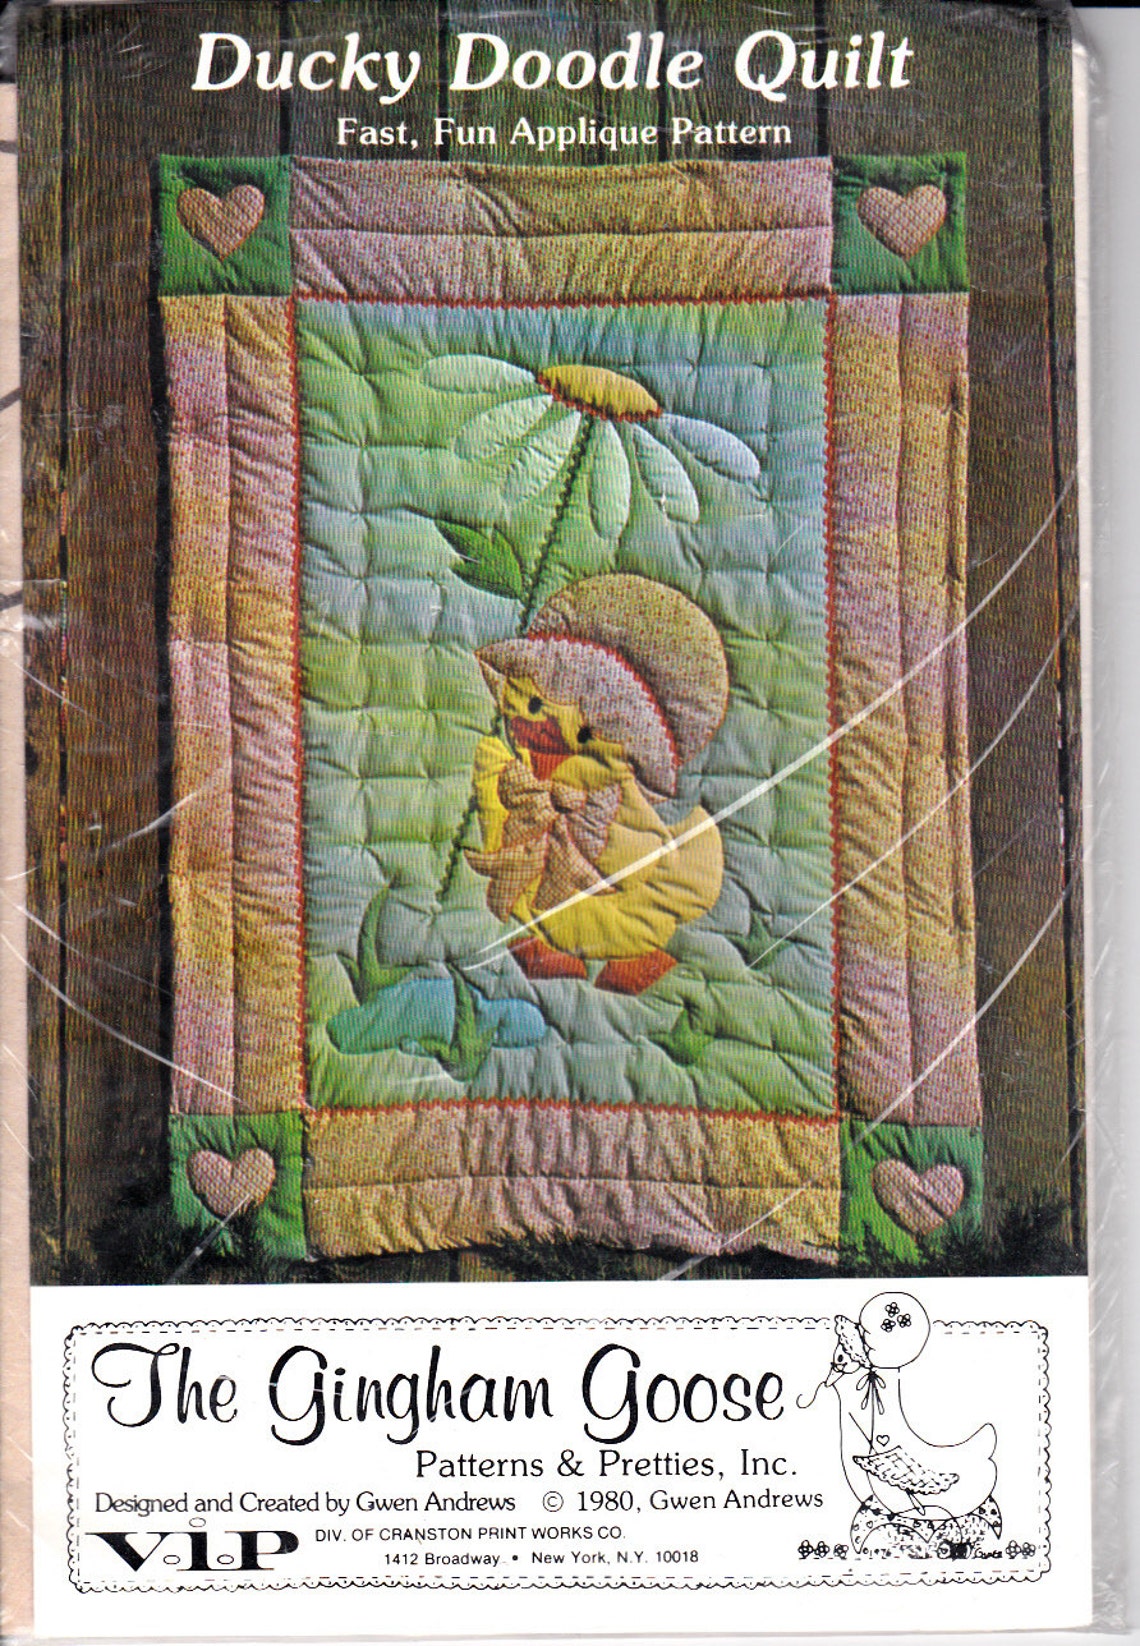 Gingham Goose Ducky Doodle Quilt Easy Applique Pattern Vintage | Etsy